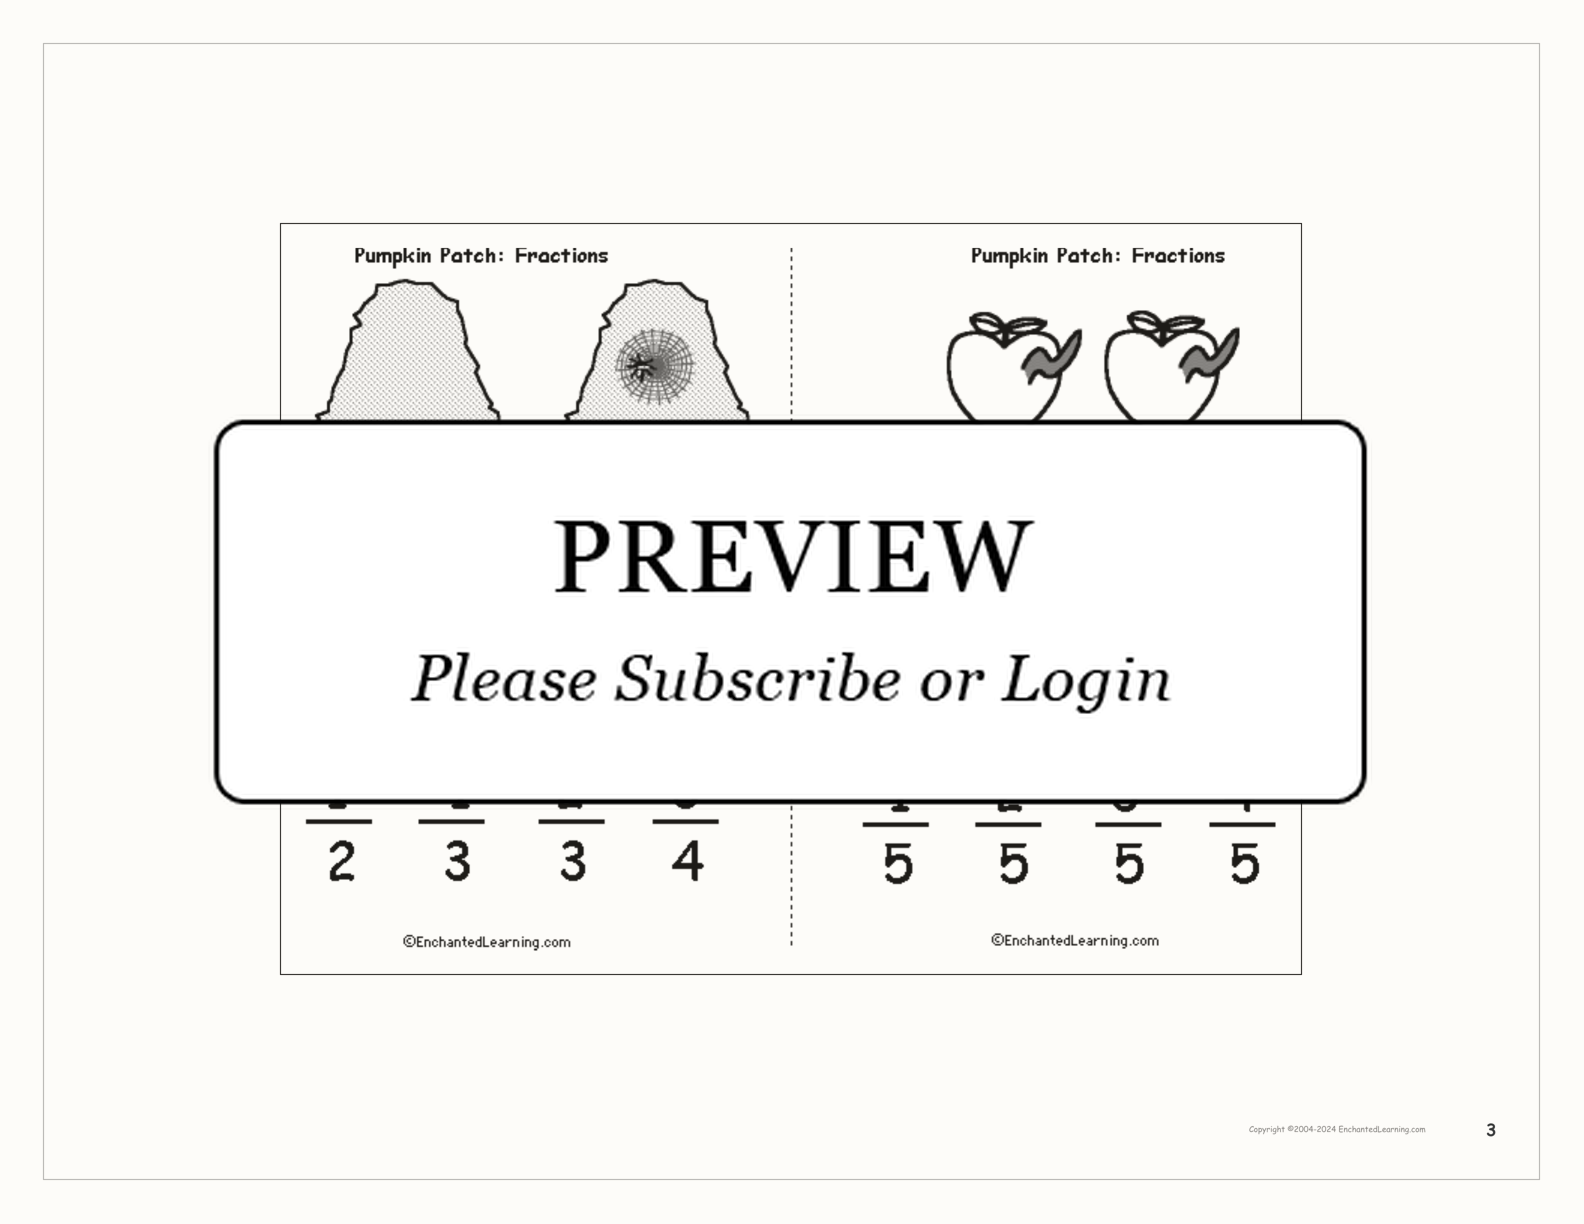 Pumpkin Patch: Fractions Book interactive printout page 3